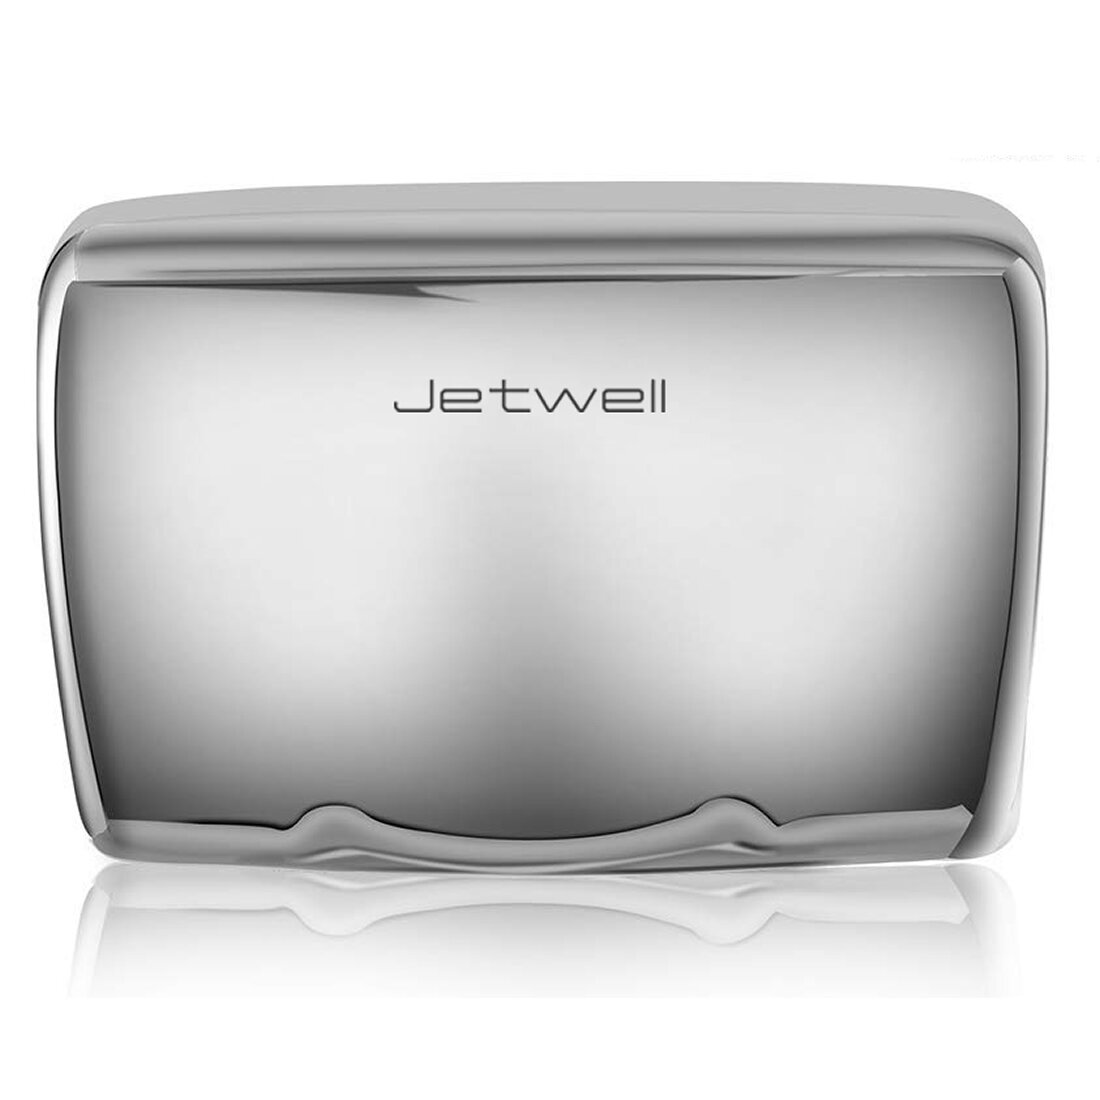 JETWELL 110 Volt Automatic Hand Dryer Wayfair